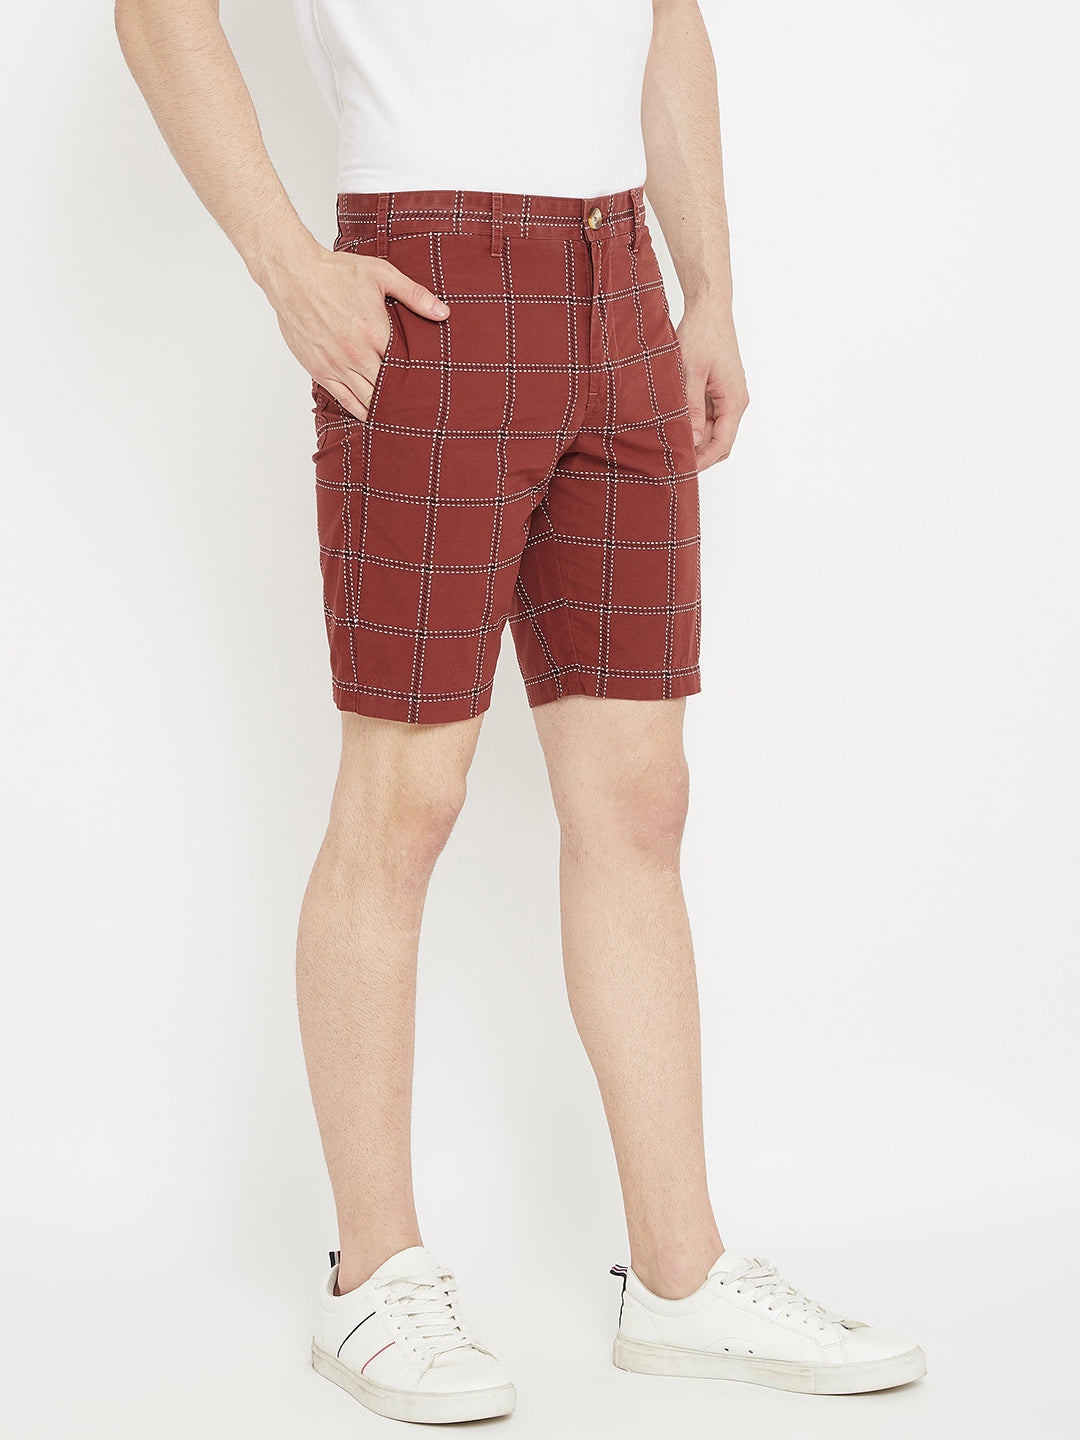 Maroon Checked shorts - Men Shorts